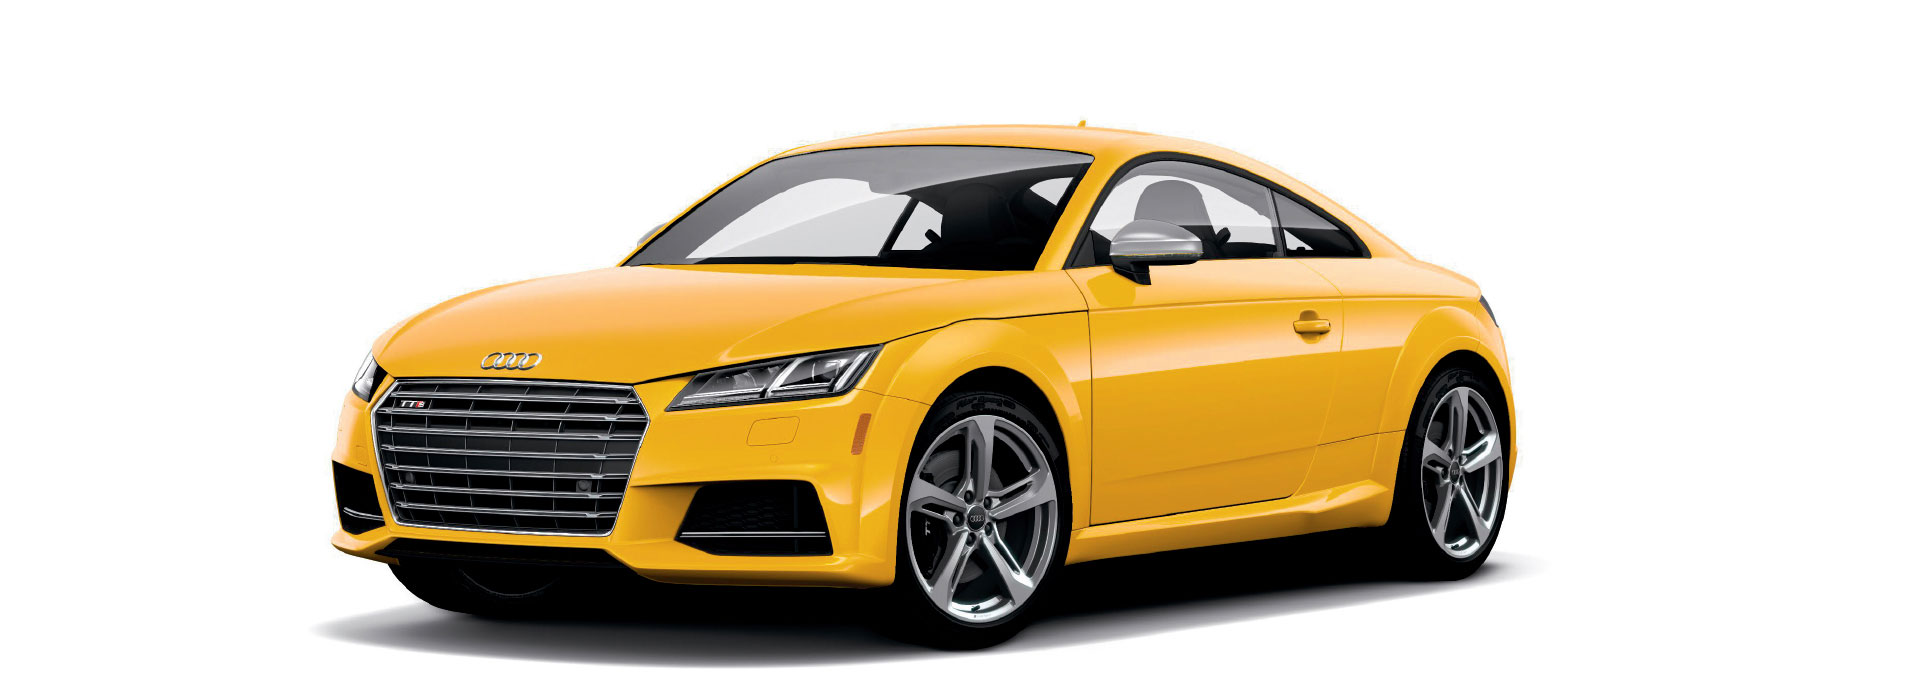 Audi TT Vegas Yellow coupe